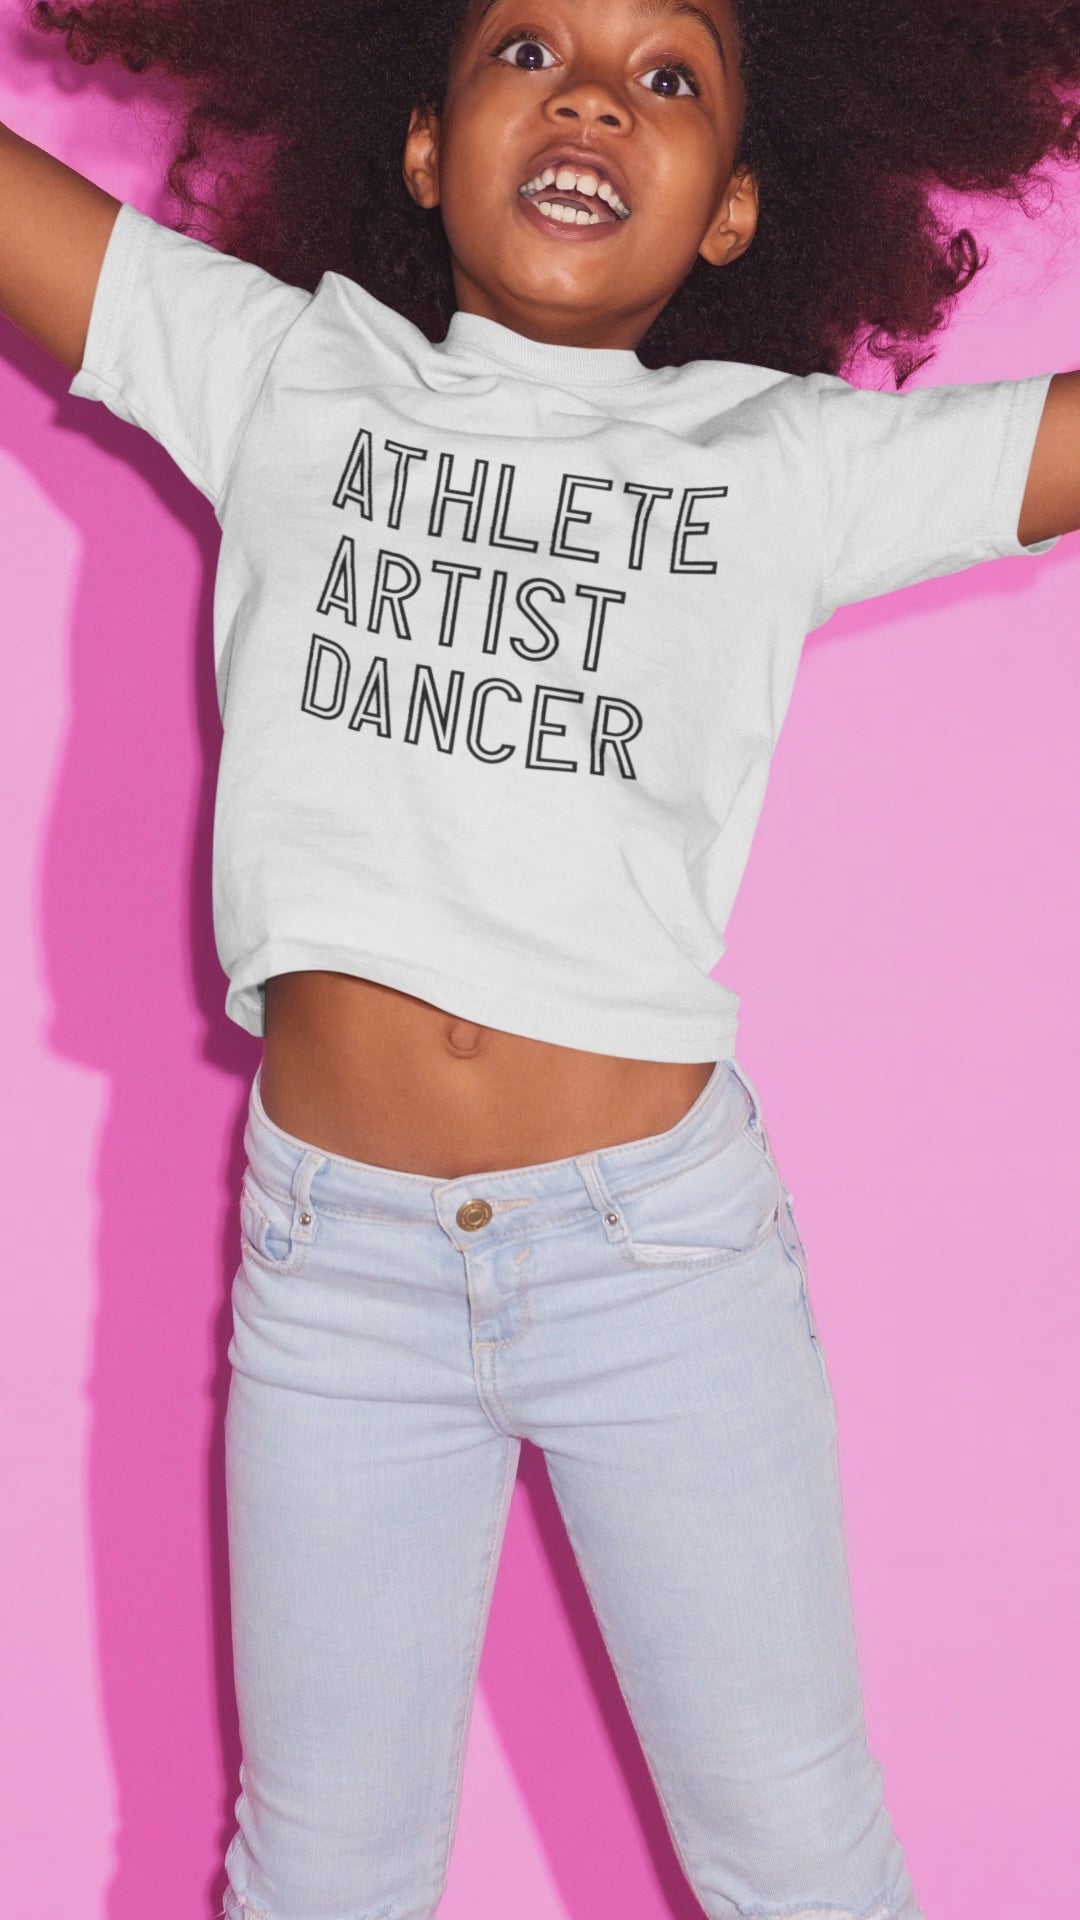 Athlete Artist Dancer T-Shirt Design Tiny Dancer SVG